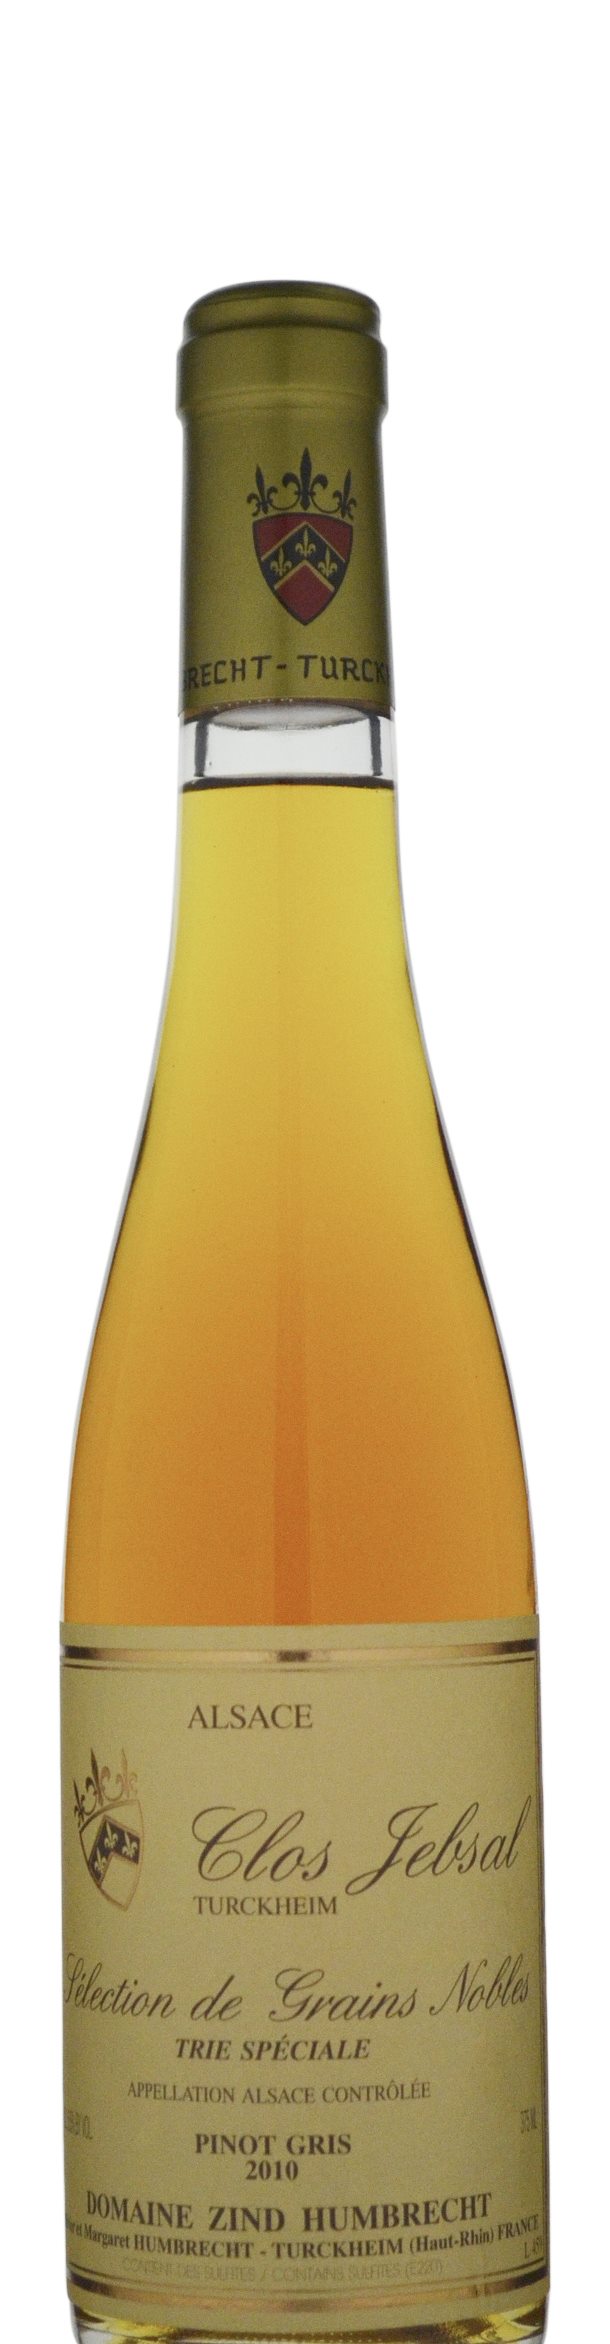 Domaine Zind Humbrecht Clos Jebsal Selection De Grains Noble Trie Speciale Tokay Pinot Gris 2010